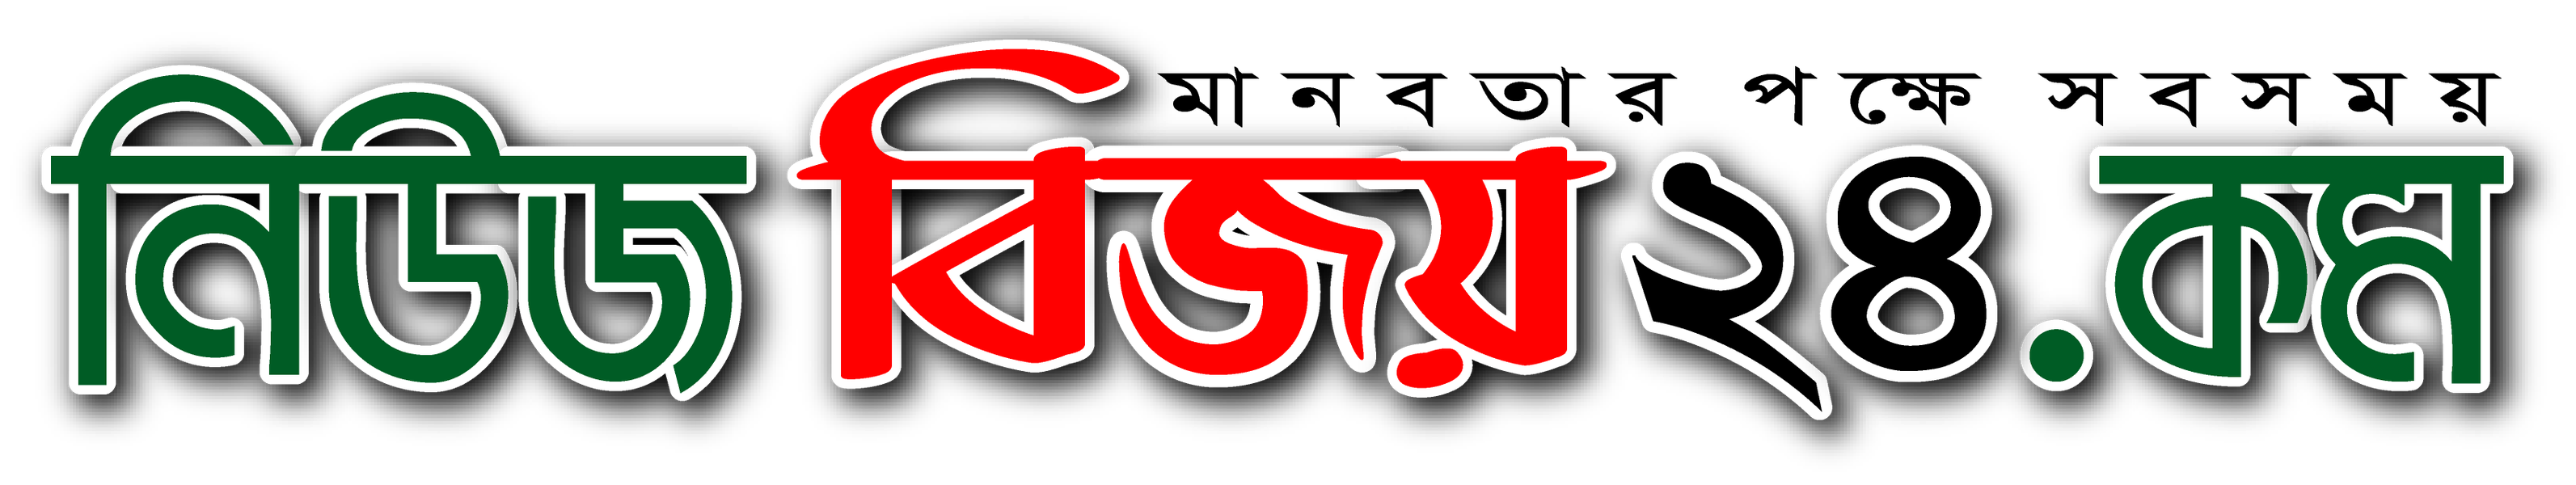 NewsBijoy24 Online Newspaper of Bangladesh.